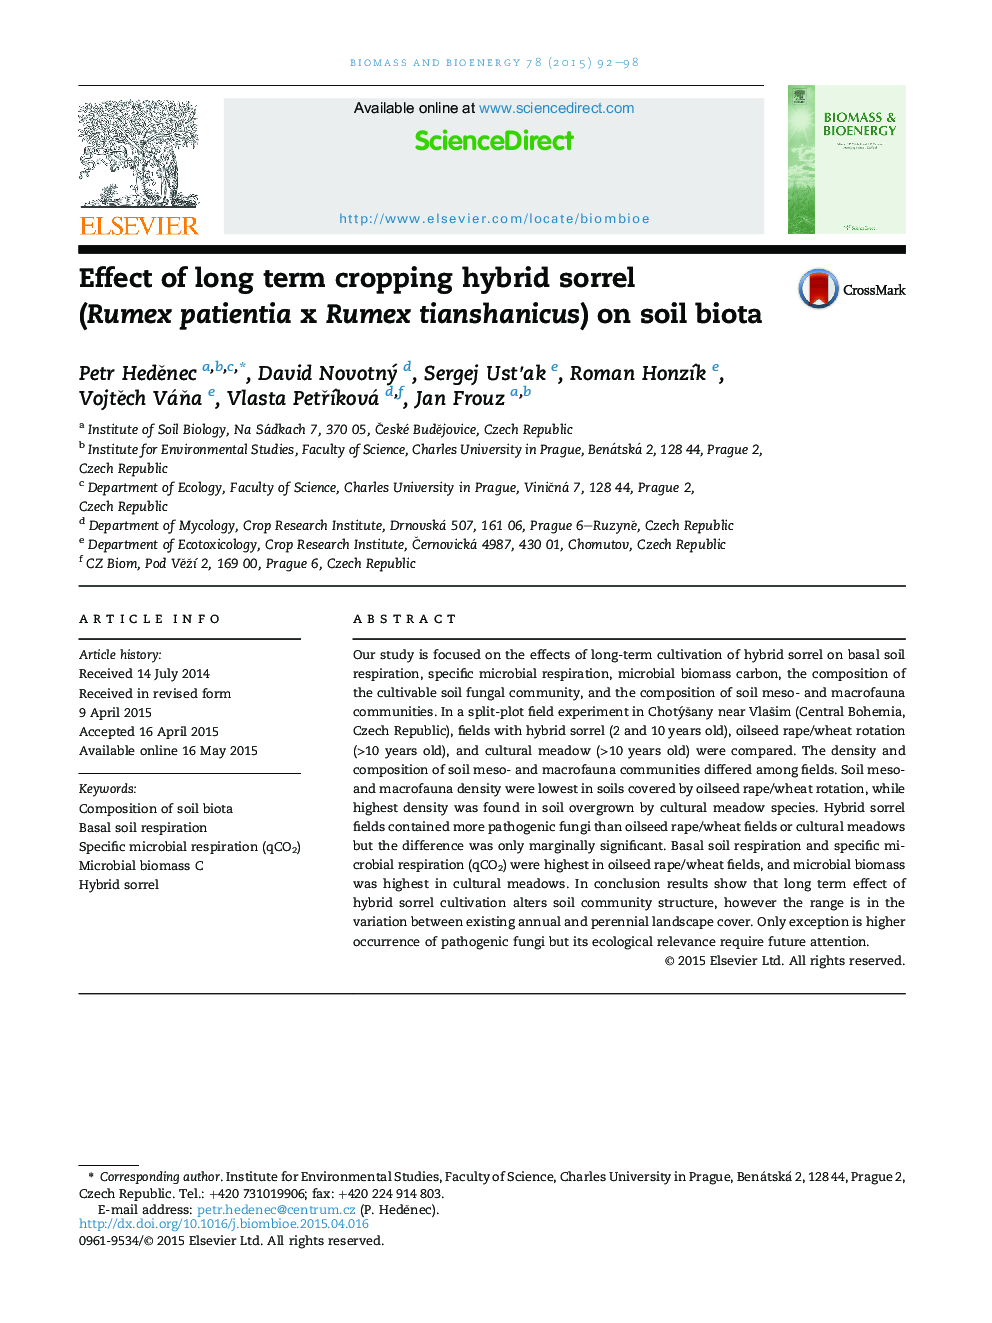 Effect of long term cropping hybrid sorrel (RumexÂ patientia x Rumex tianshanicus) on soil biota